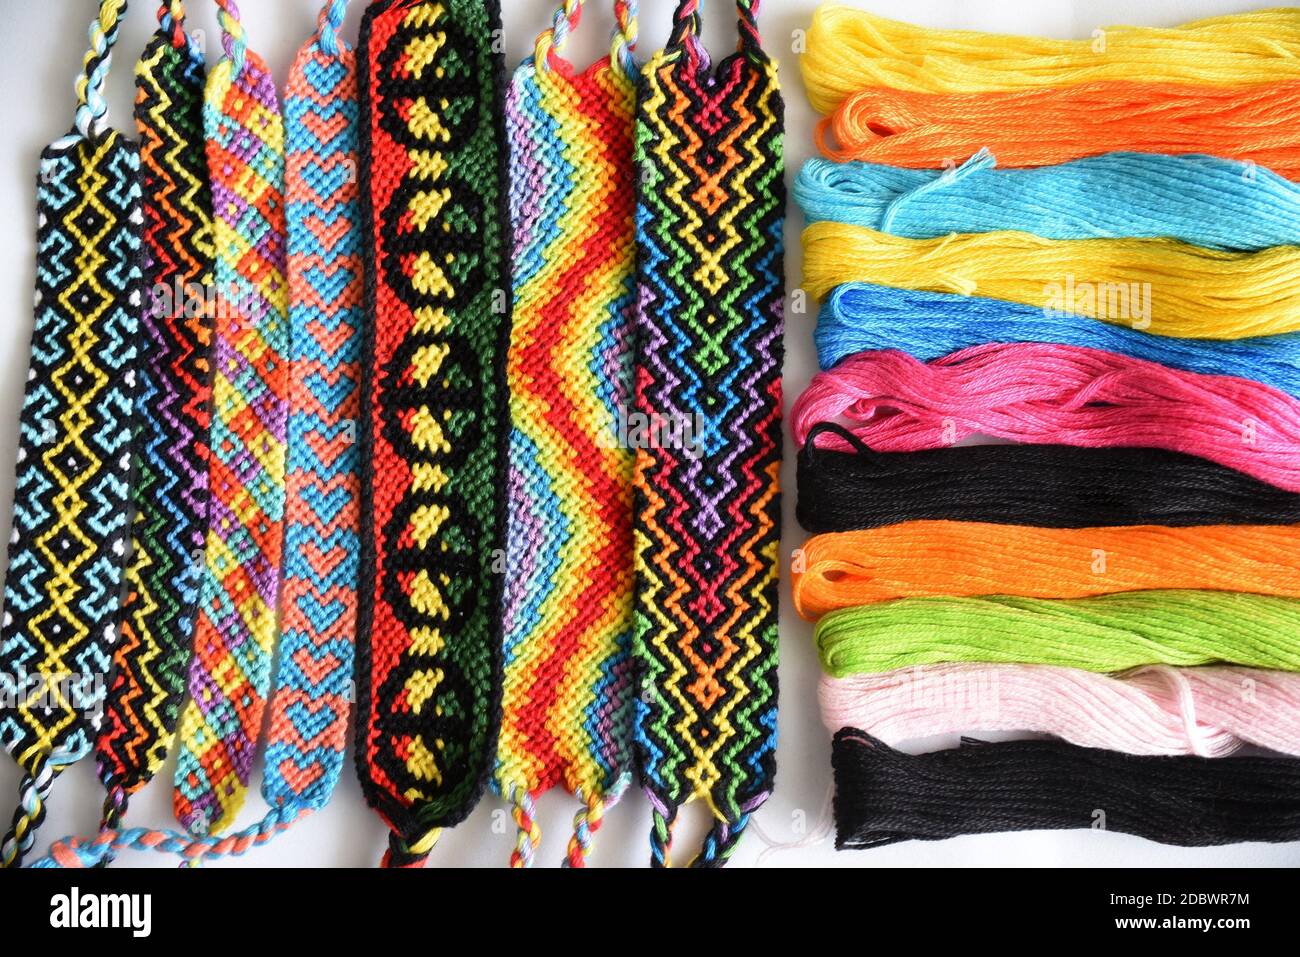 Bracelet Woven Thread Colorful Friendship Bracelet Stock Image